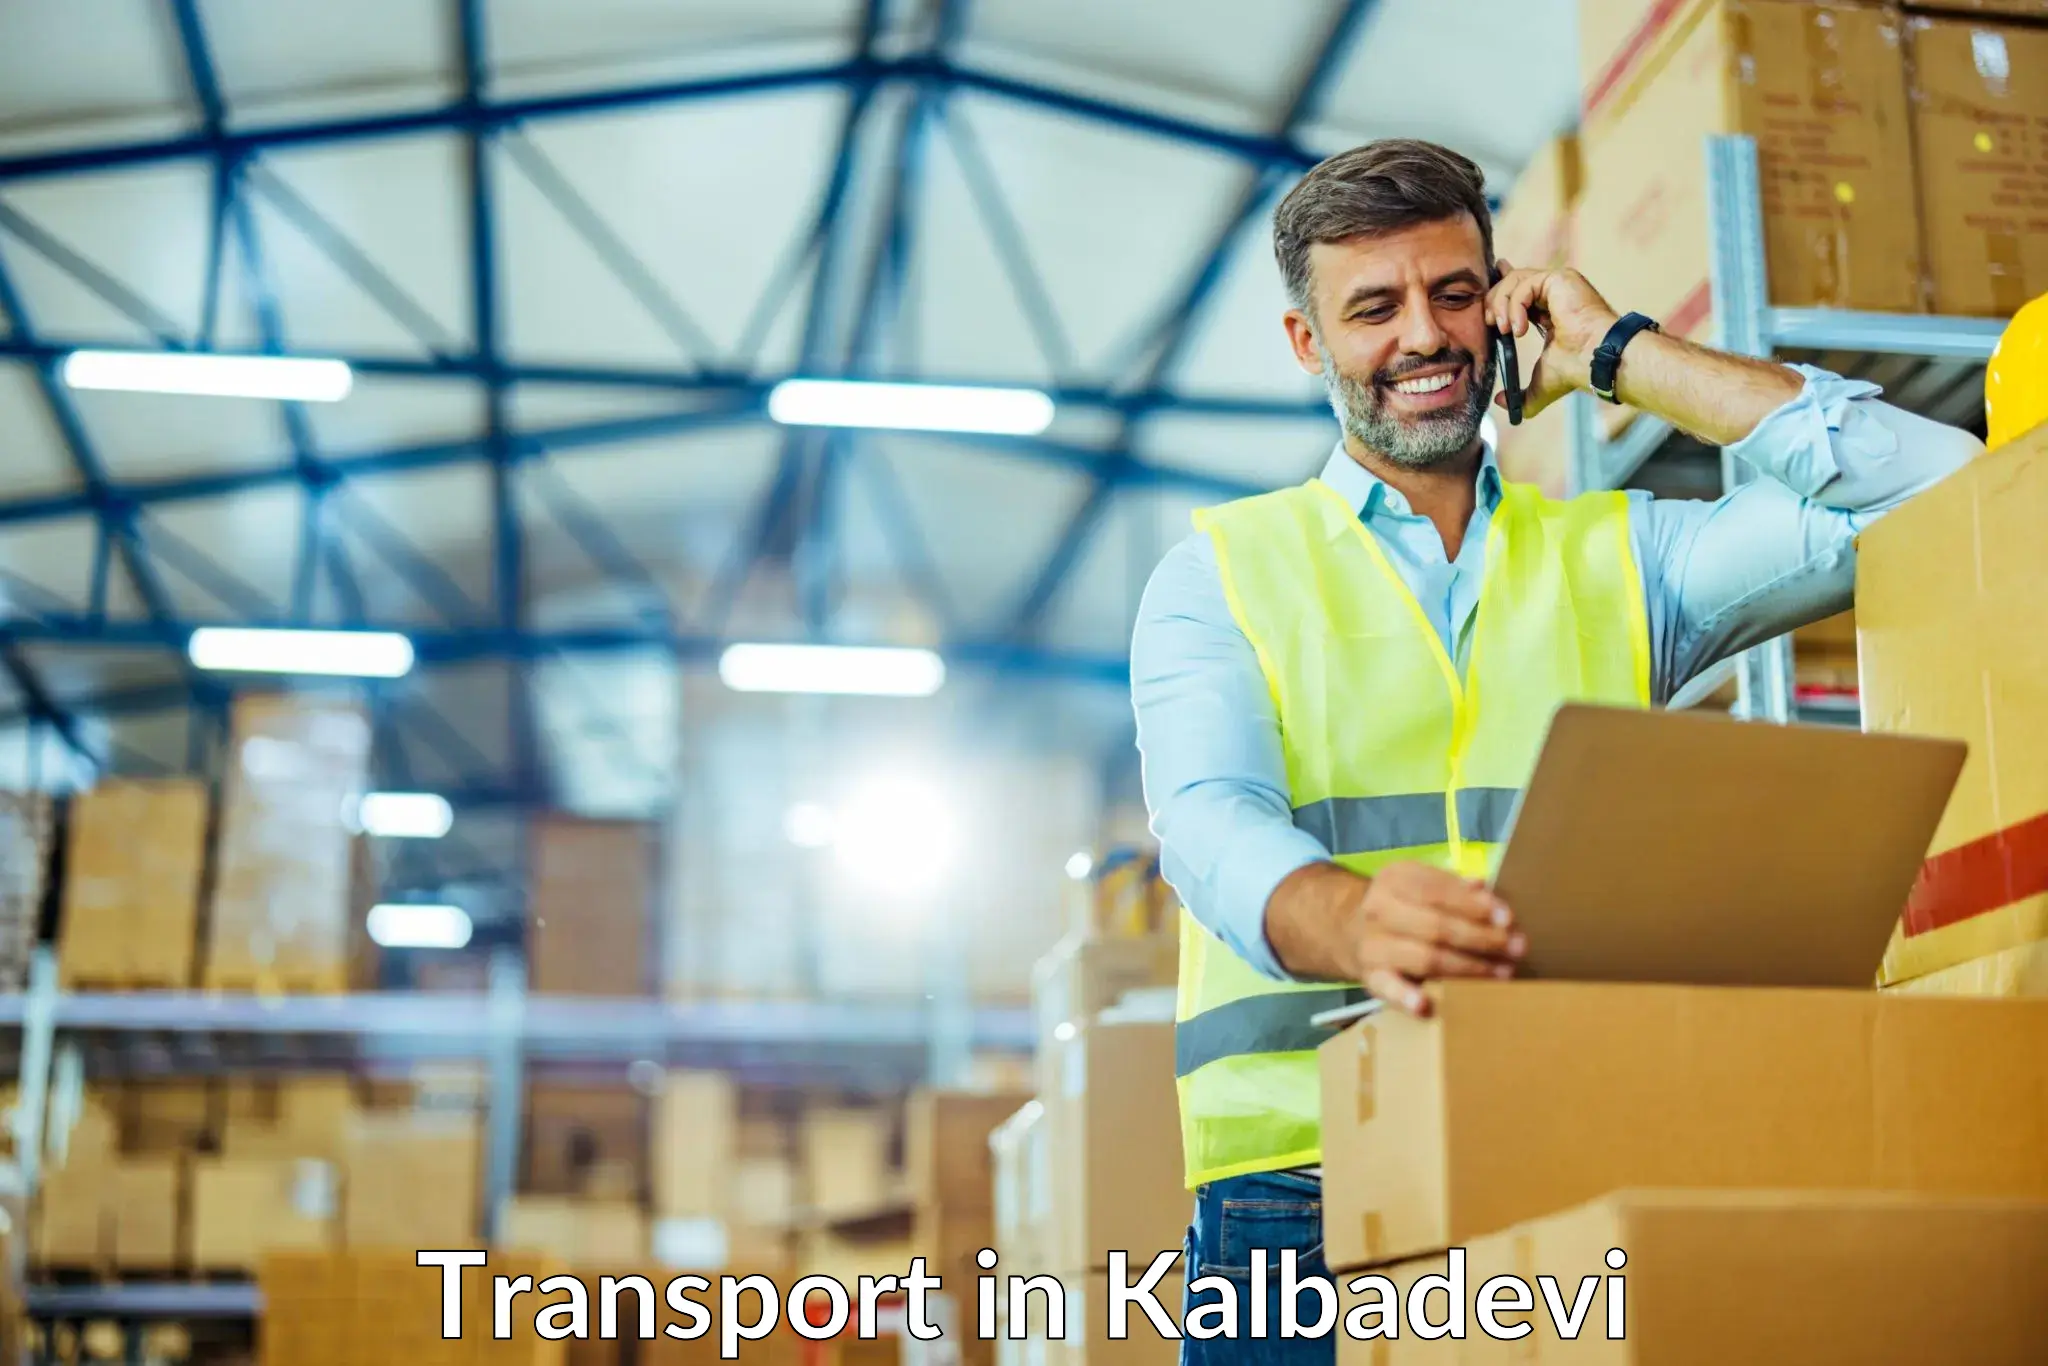 Road transport online services in Kalbadevi